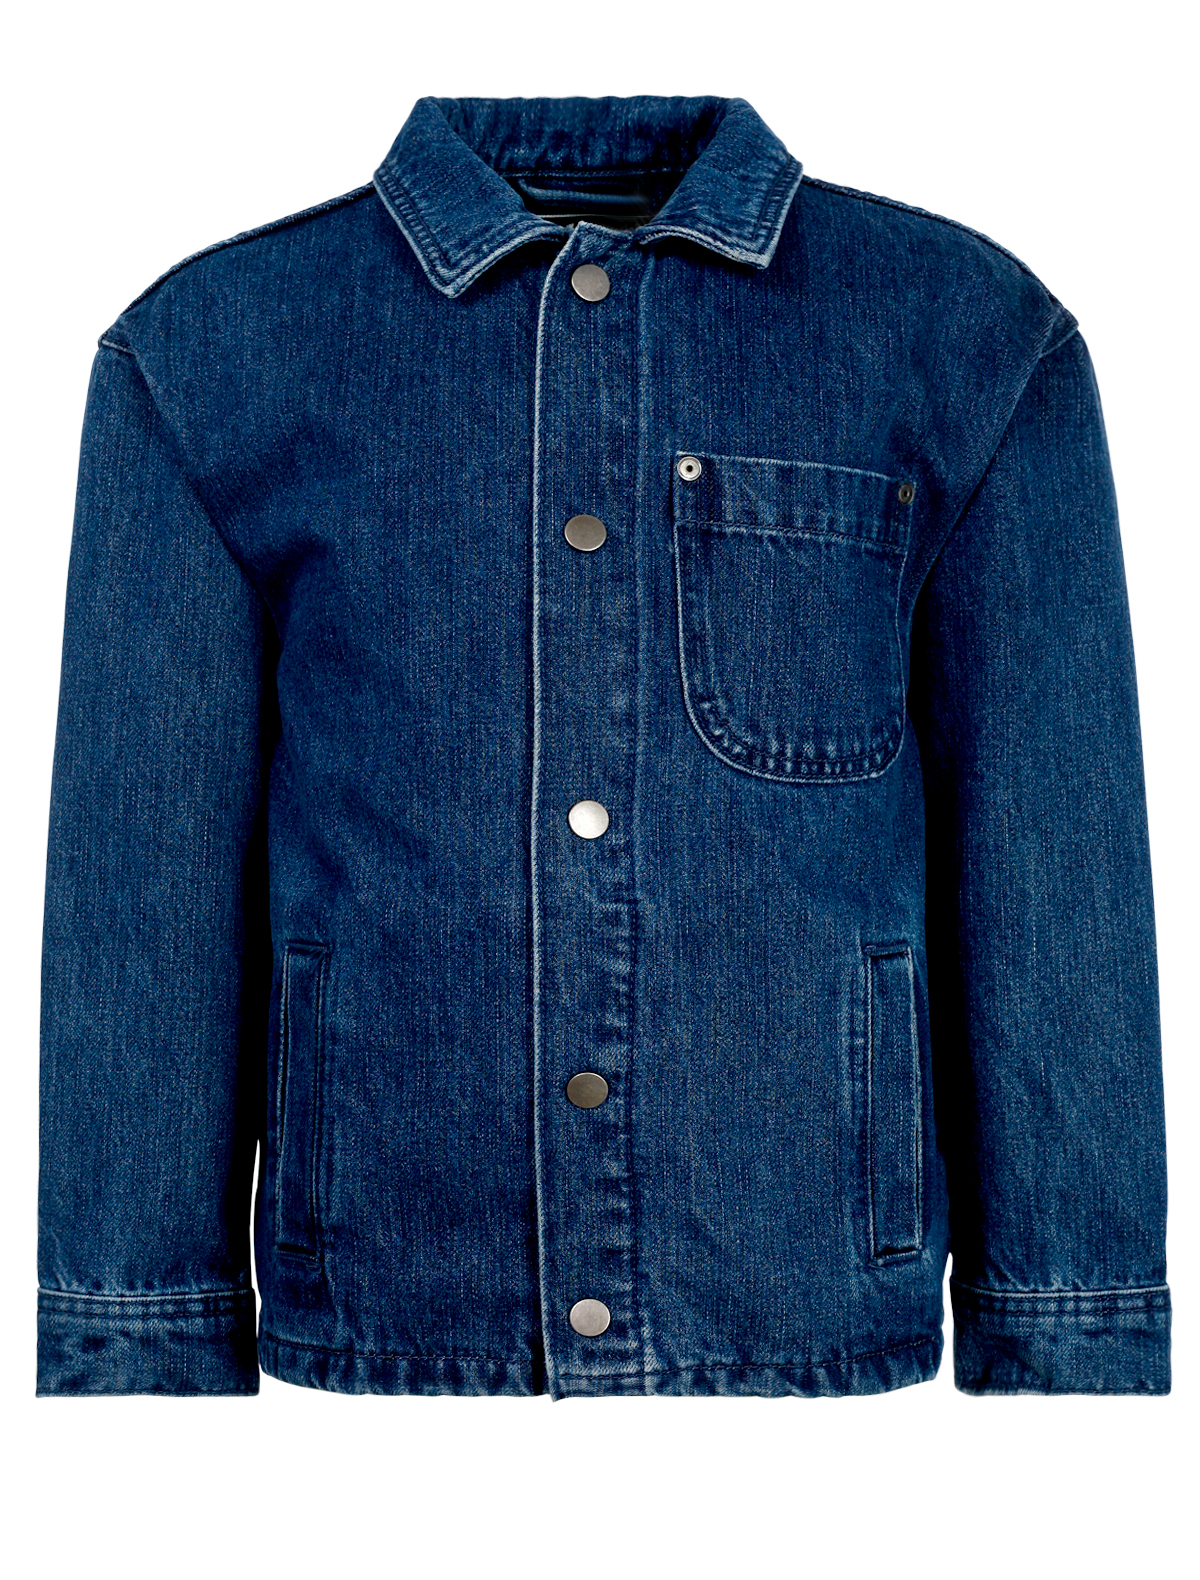 Куртка SILVER SPOON 2549270, цвет синий, размер 6